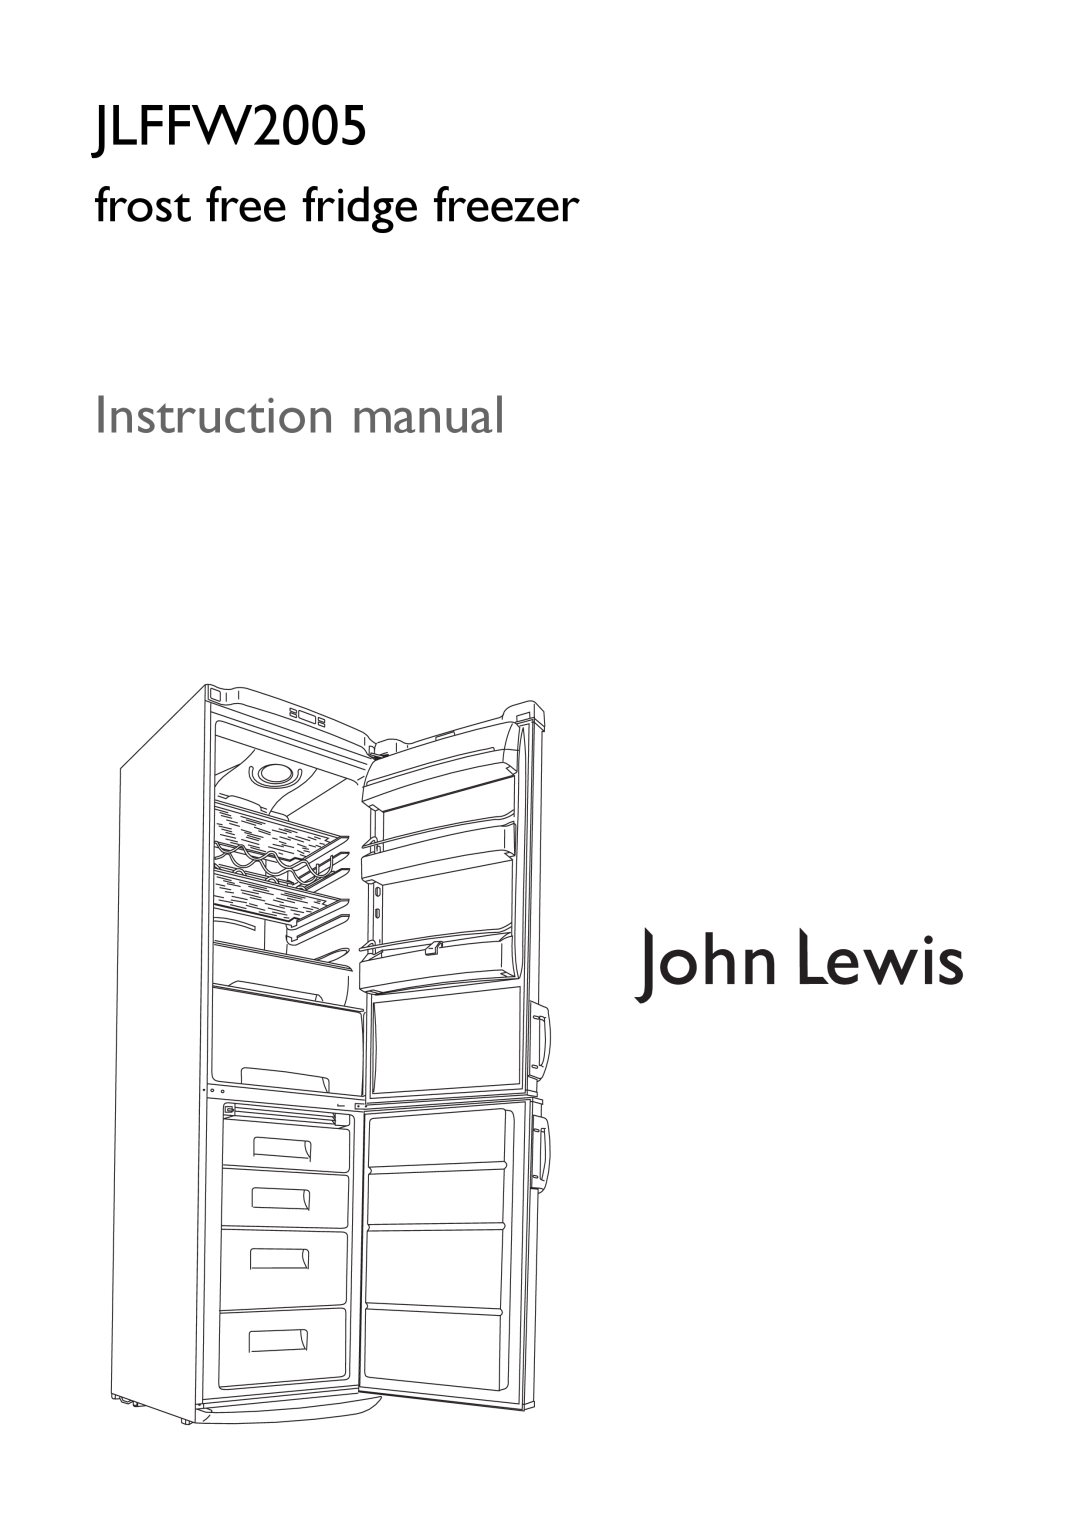 John Lewis JLFFW2005 instruction manual frost free fridge freezer 